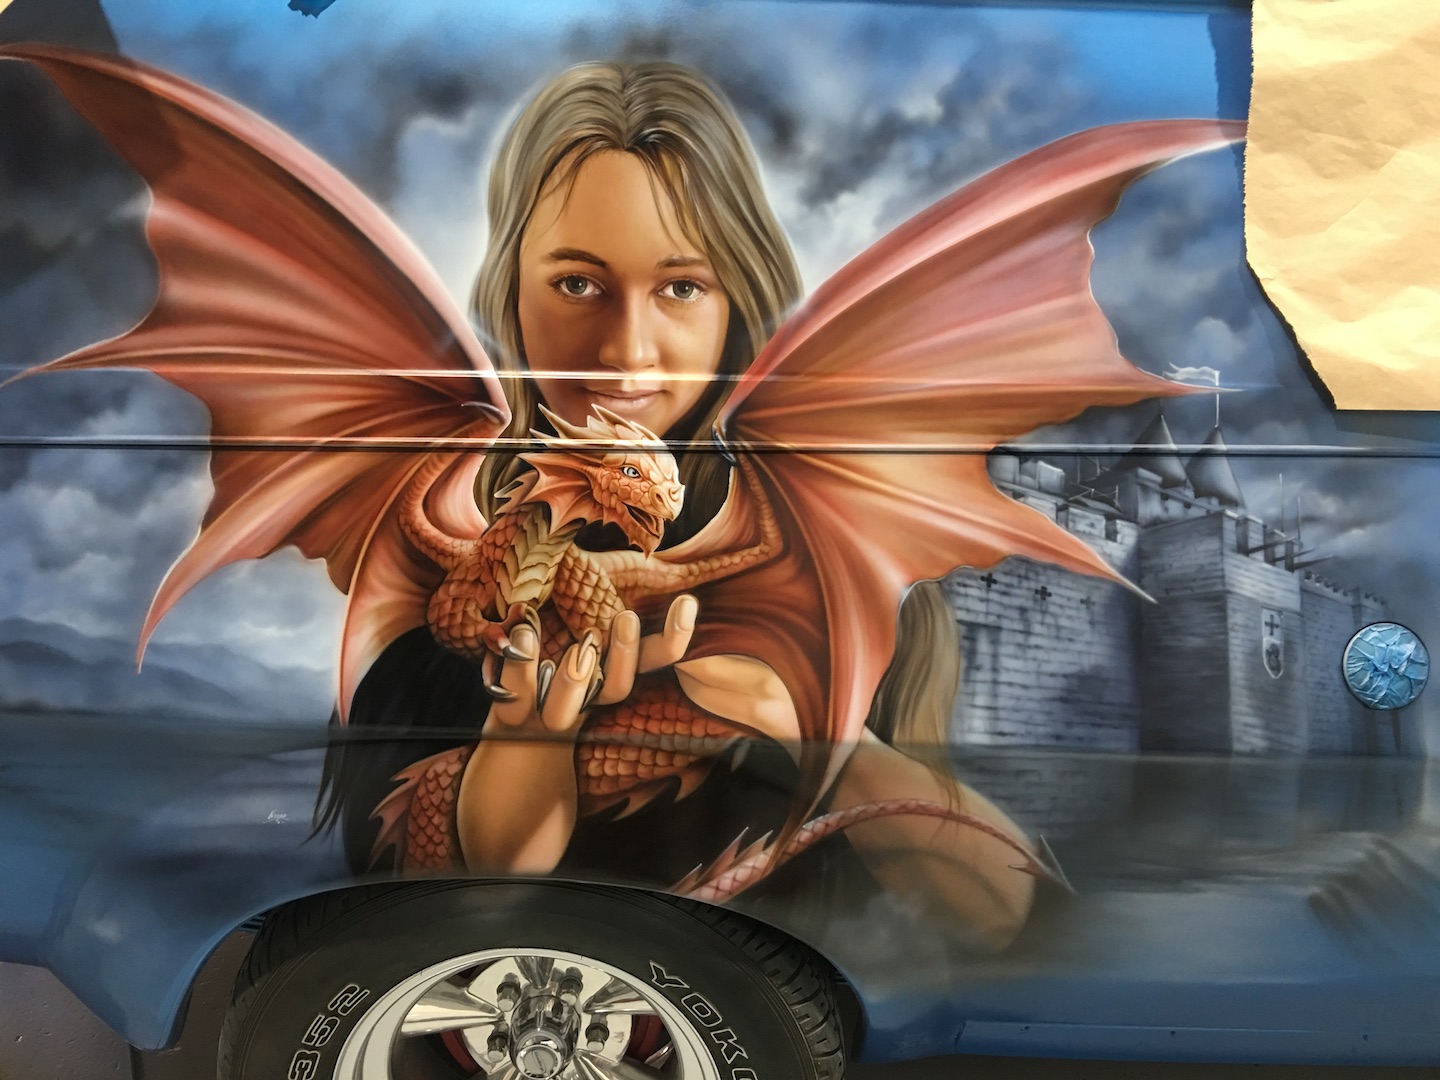 Panel van blue dragon with daughter